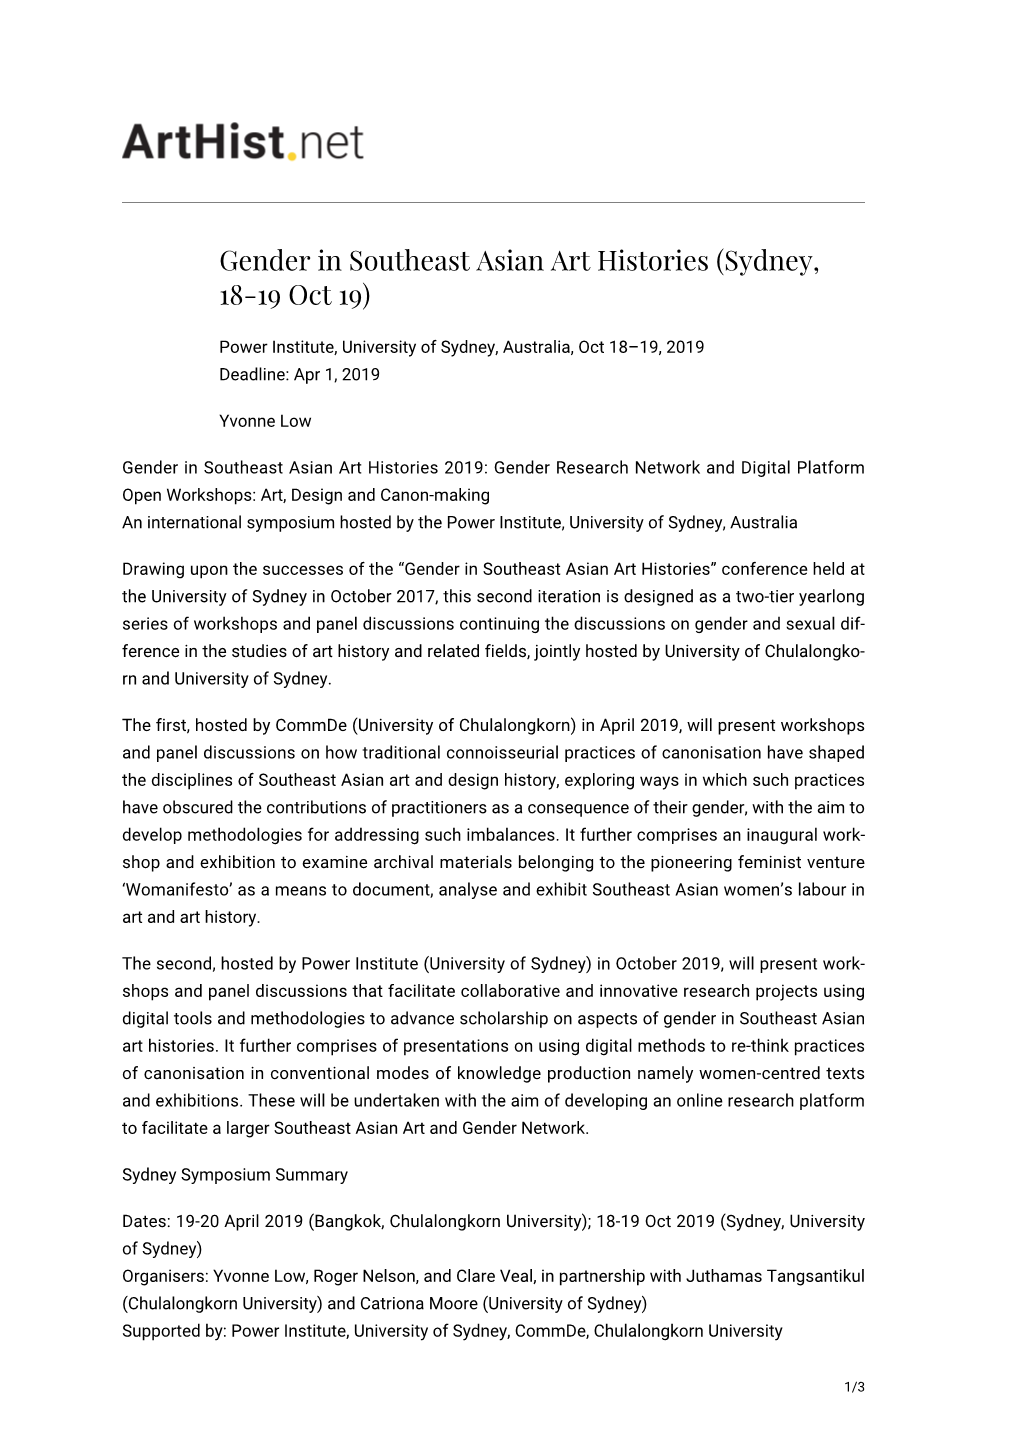 Gender in Southeast Asian Art Histories (Sydney, 18-19 Oct 19)